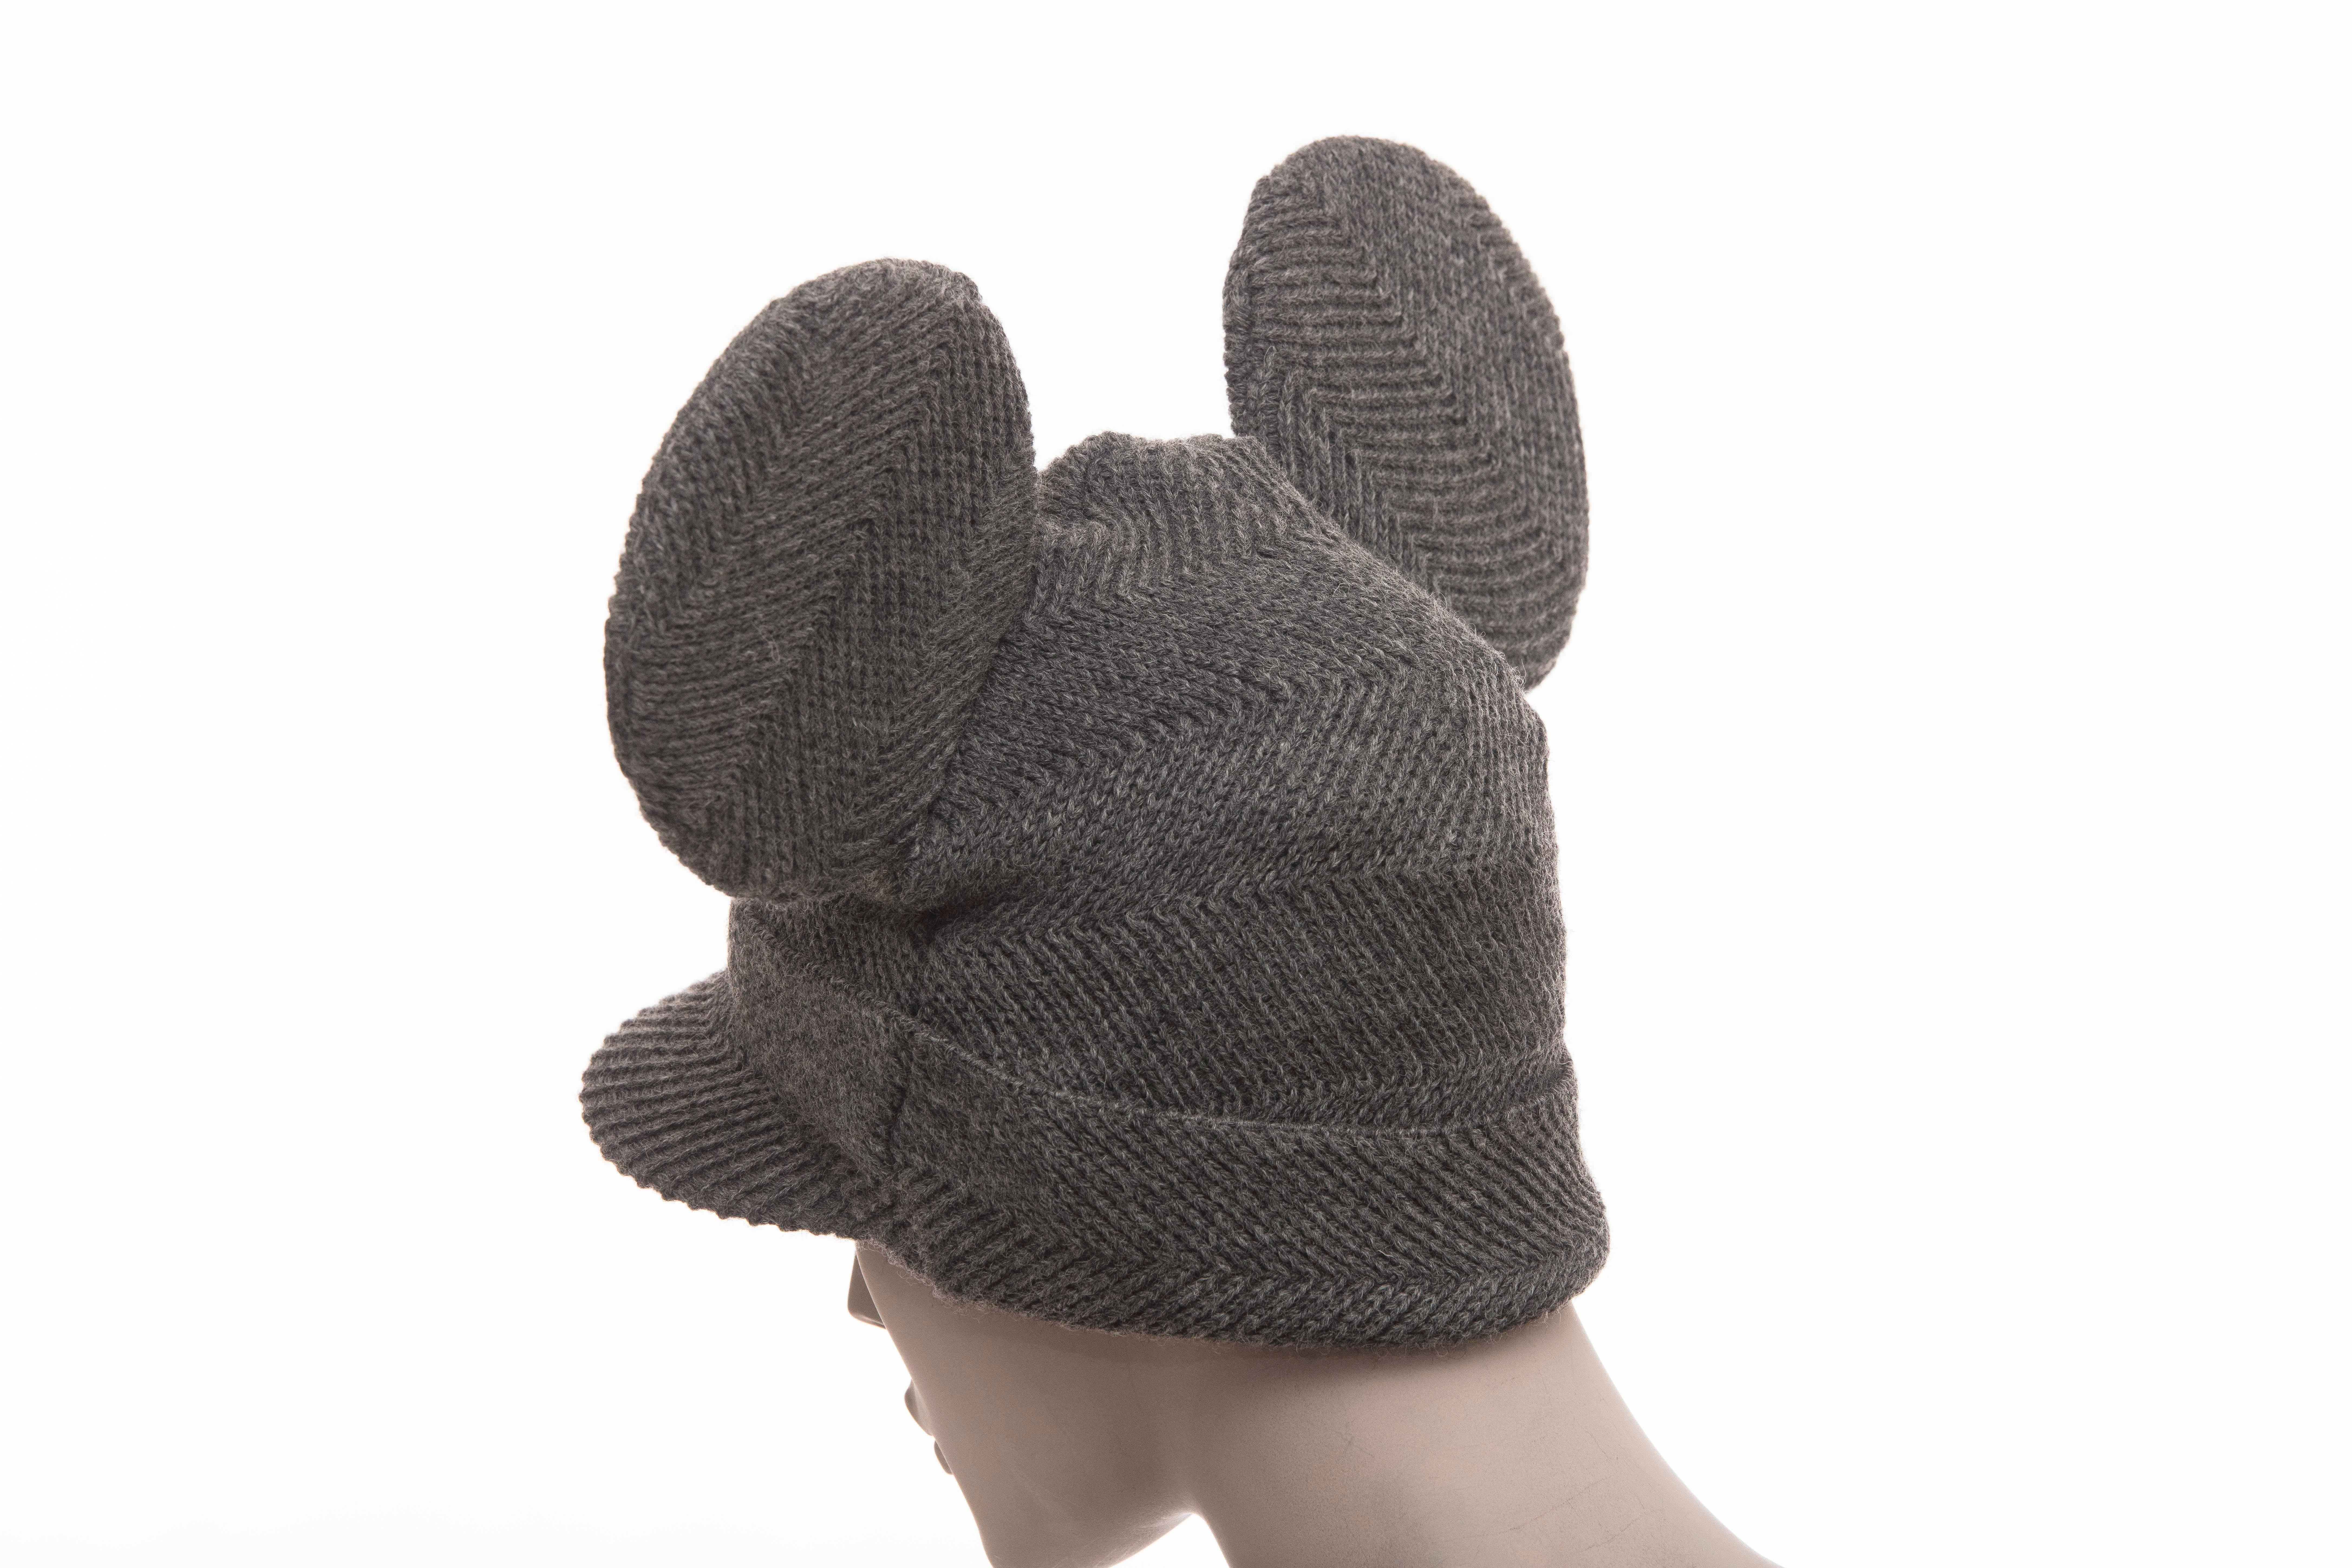 Gray Comme des Garcons Stephen Jones Grey Wool Herringbone Mouse Ears Hat, Fall 2013